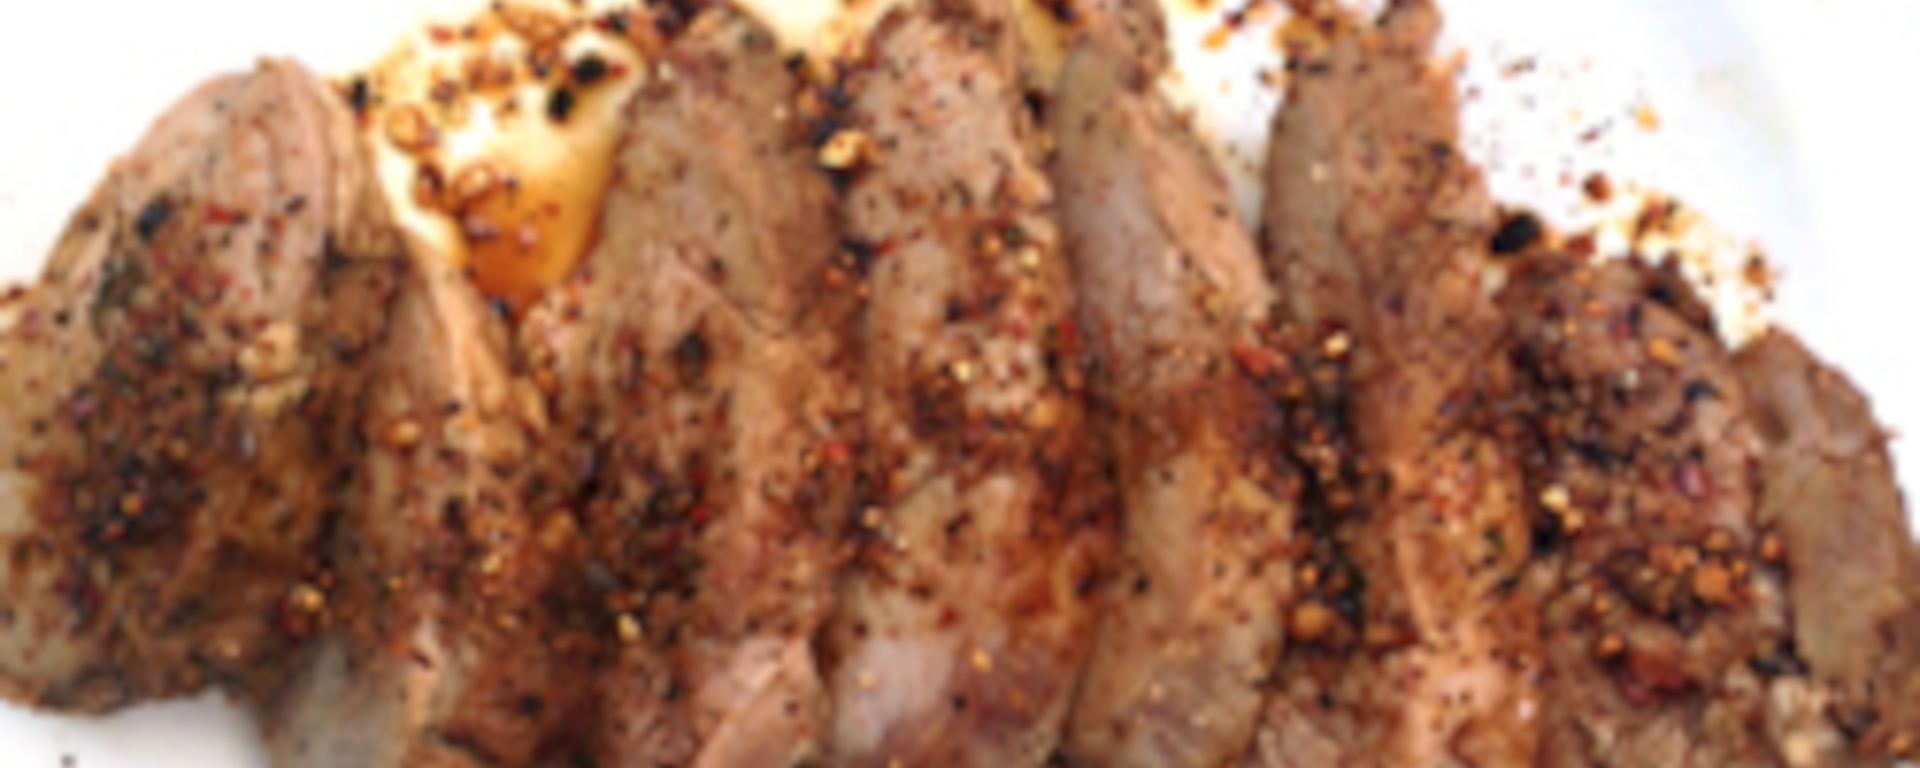 LuvMyRecipe.com - Shichimi Togarashi Grilled Pork Tenderloin Featured